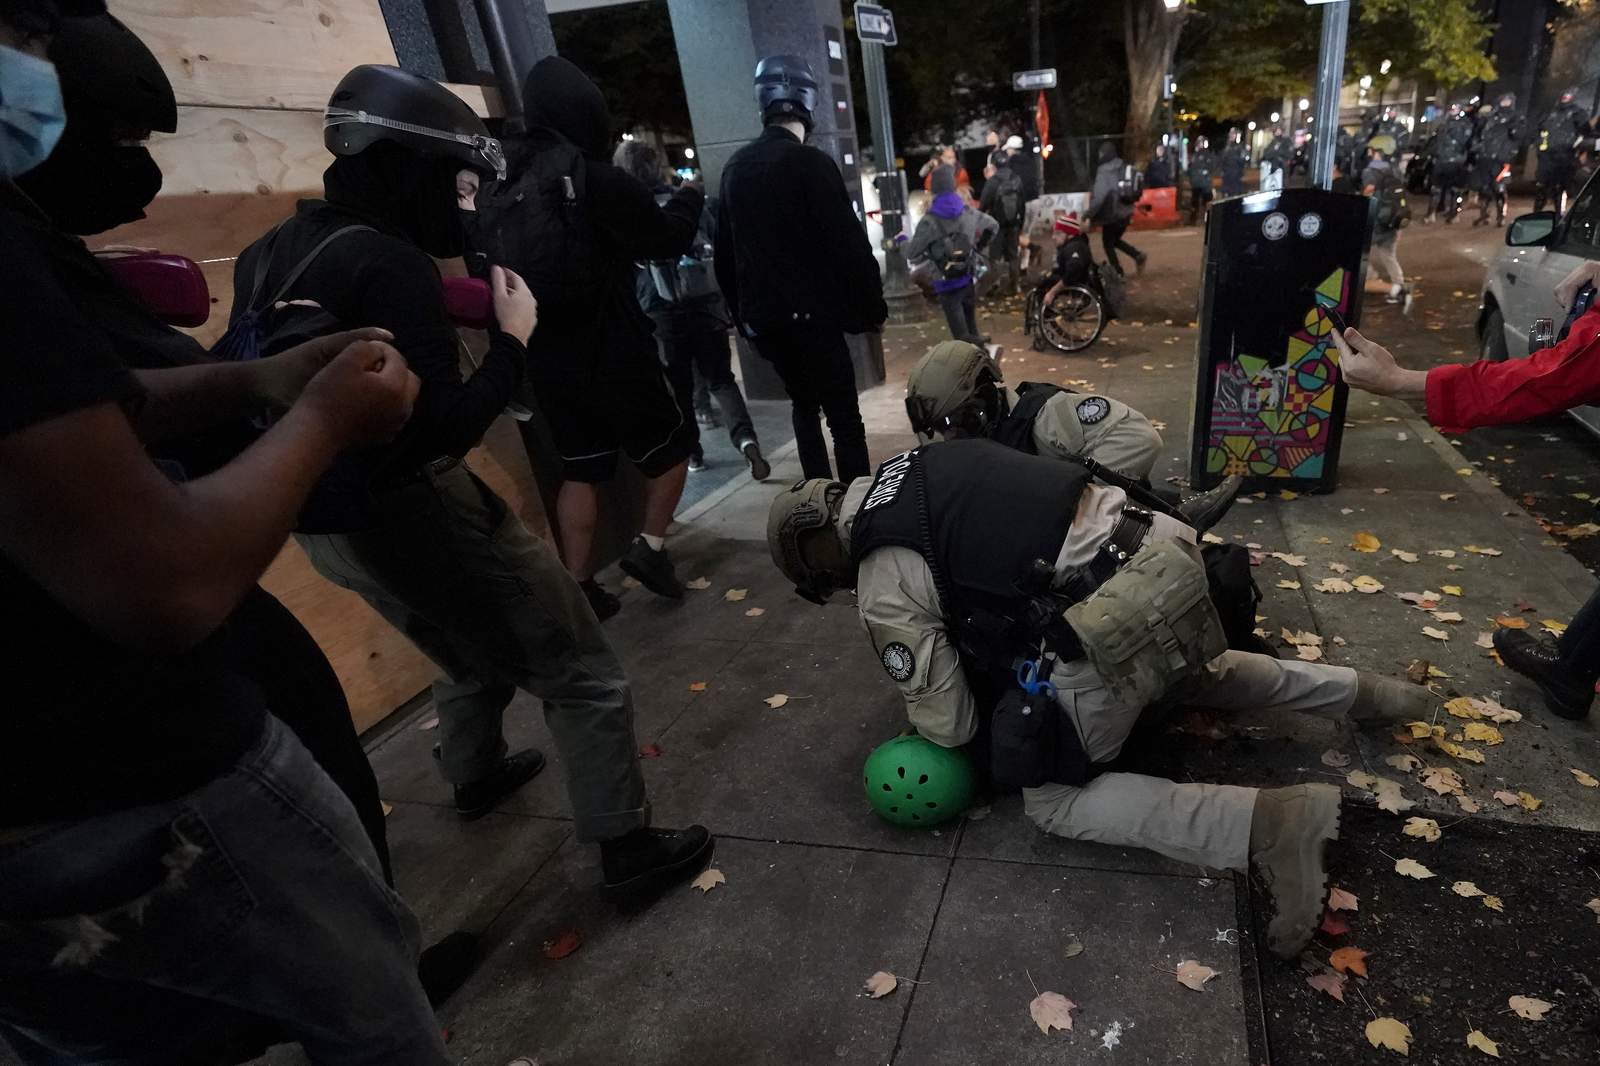 Riot declared in Portland as protesters smash windows